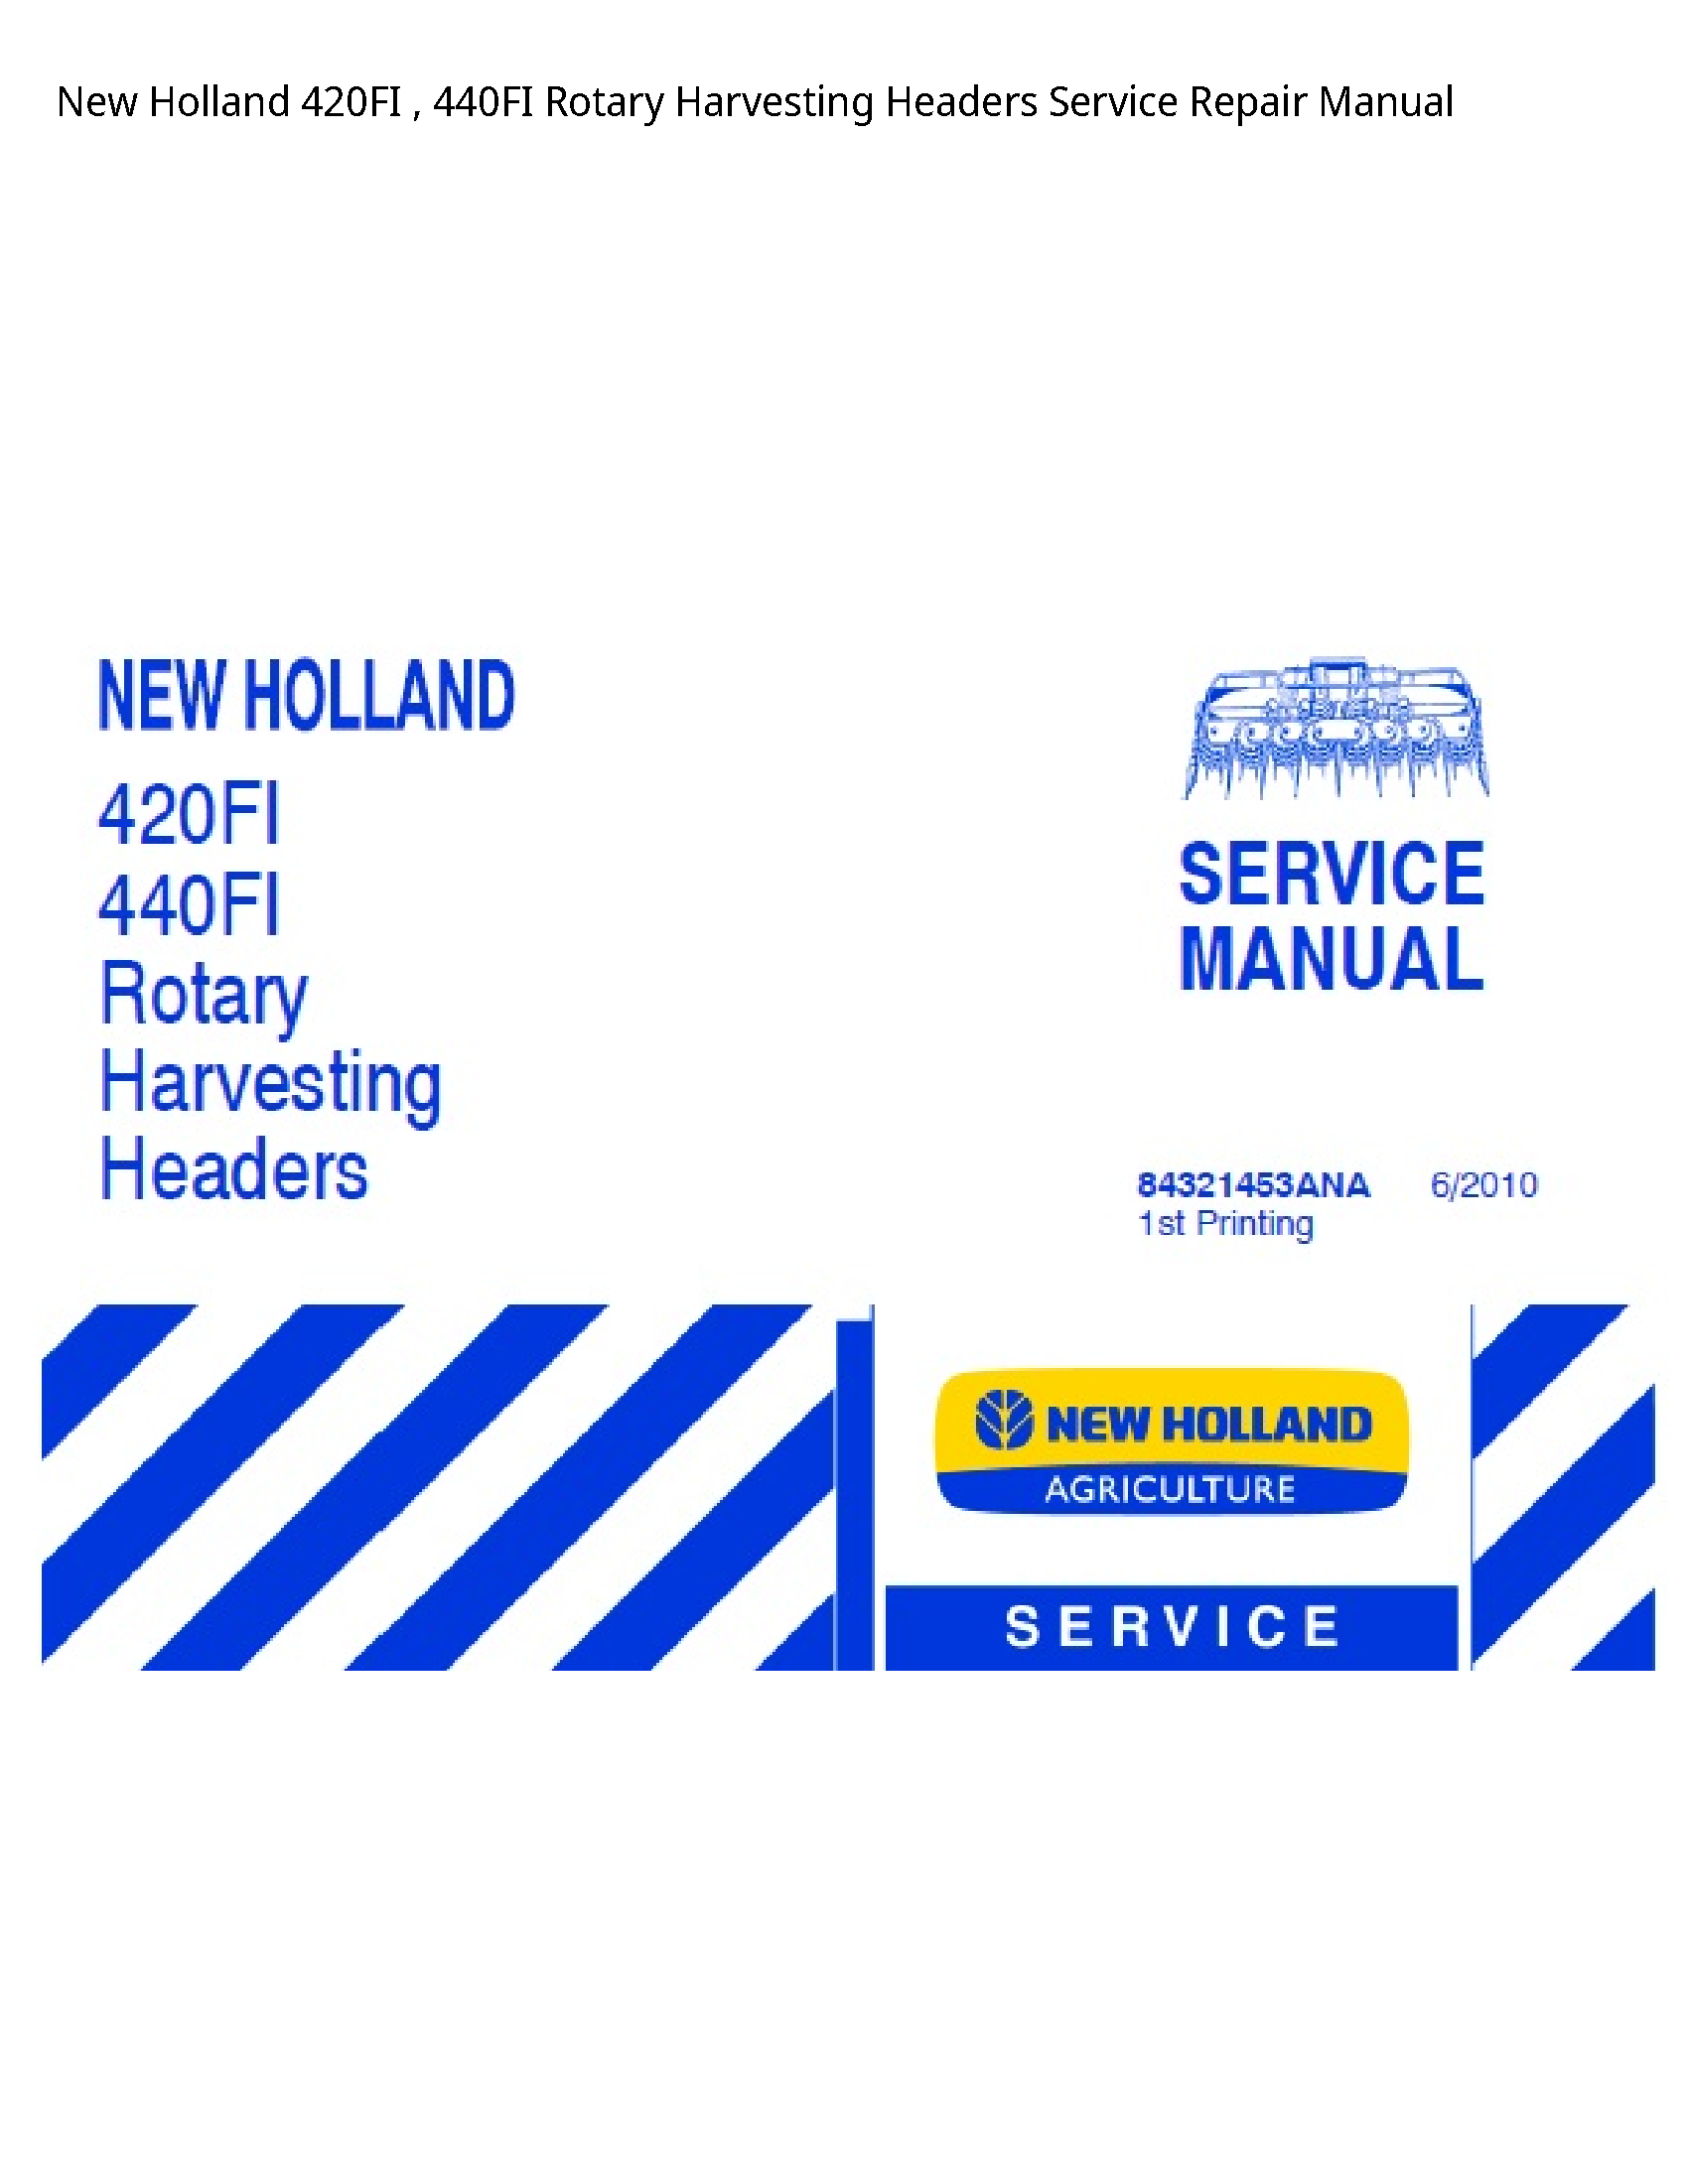 New Holland 420FI Rotary Harvesting Headers manual